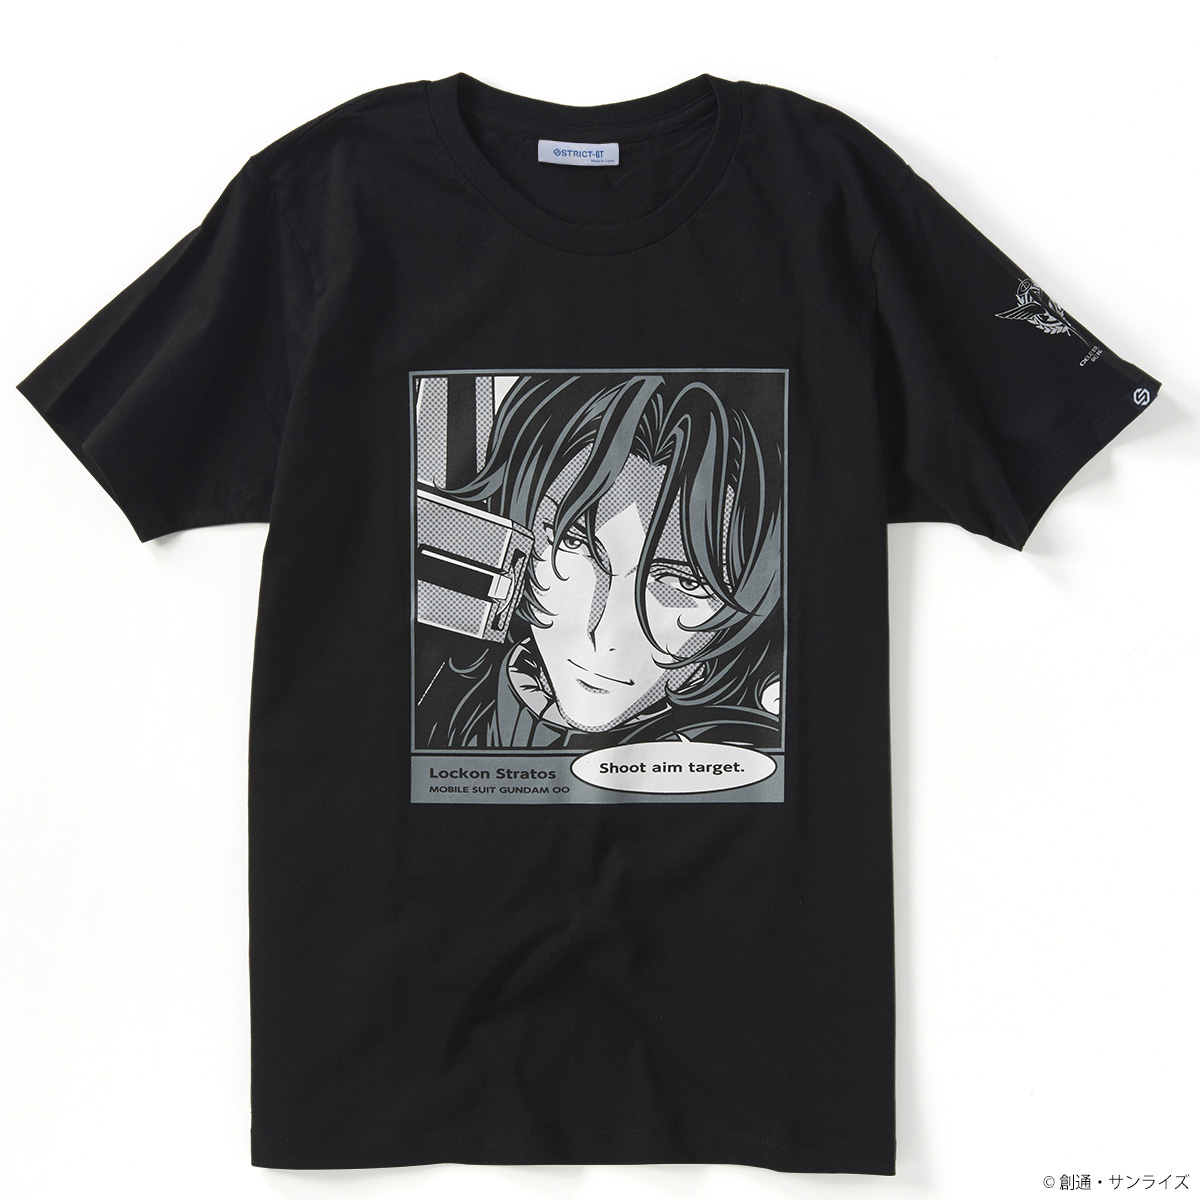 STRICT-G 『機動戦士ガンダム00』 POP ART Tシャツ ロックオン・ストラトス